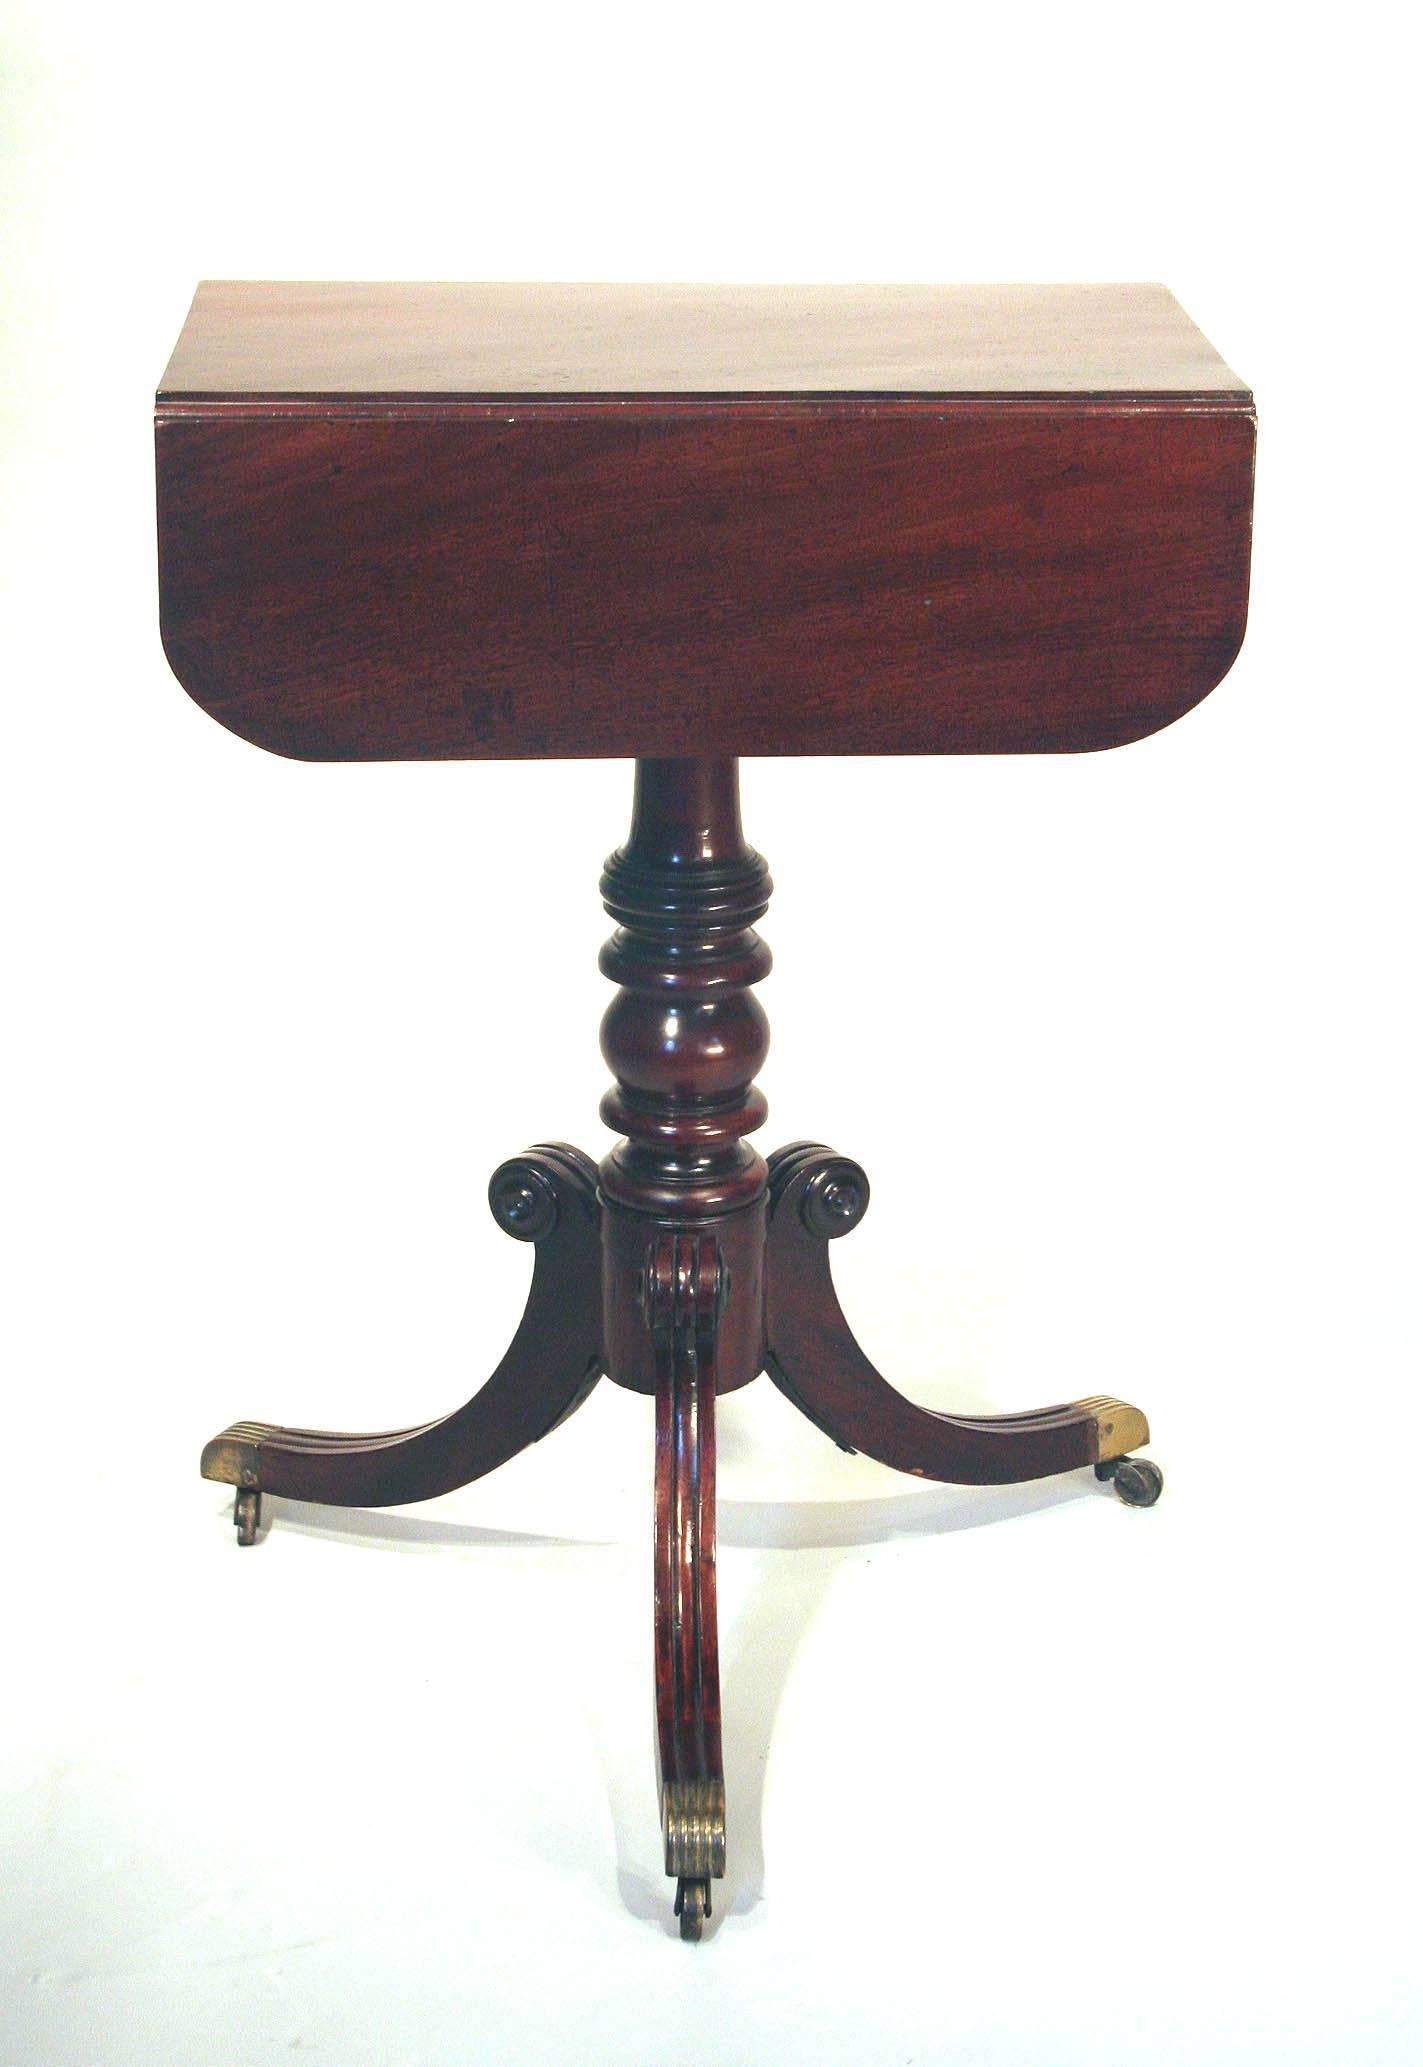 19th Century English Regency Mahogany Drop-Leaf Side Table For Sale 1